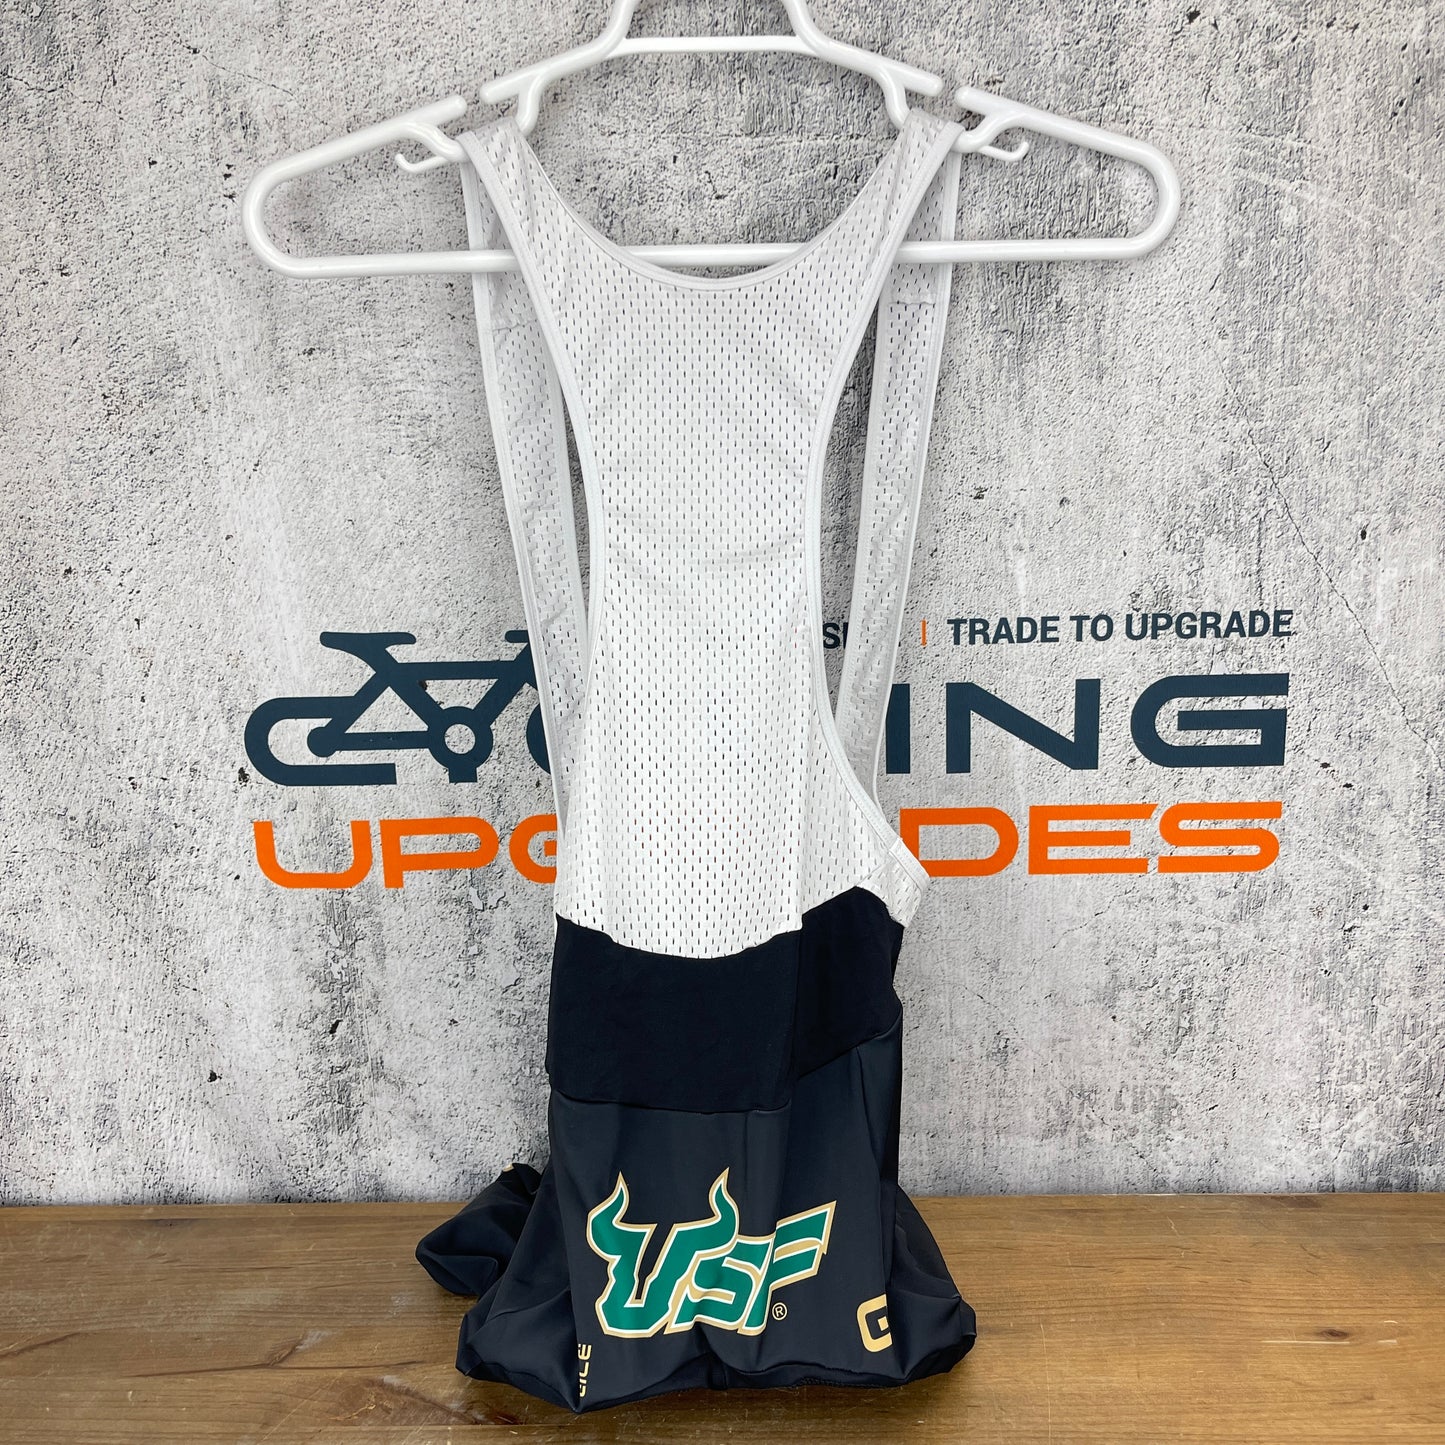 ALE USF Cycling Club Men's XL University of South Florida Bib Shorts Jersey Kit